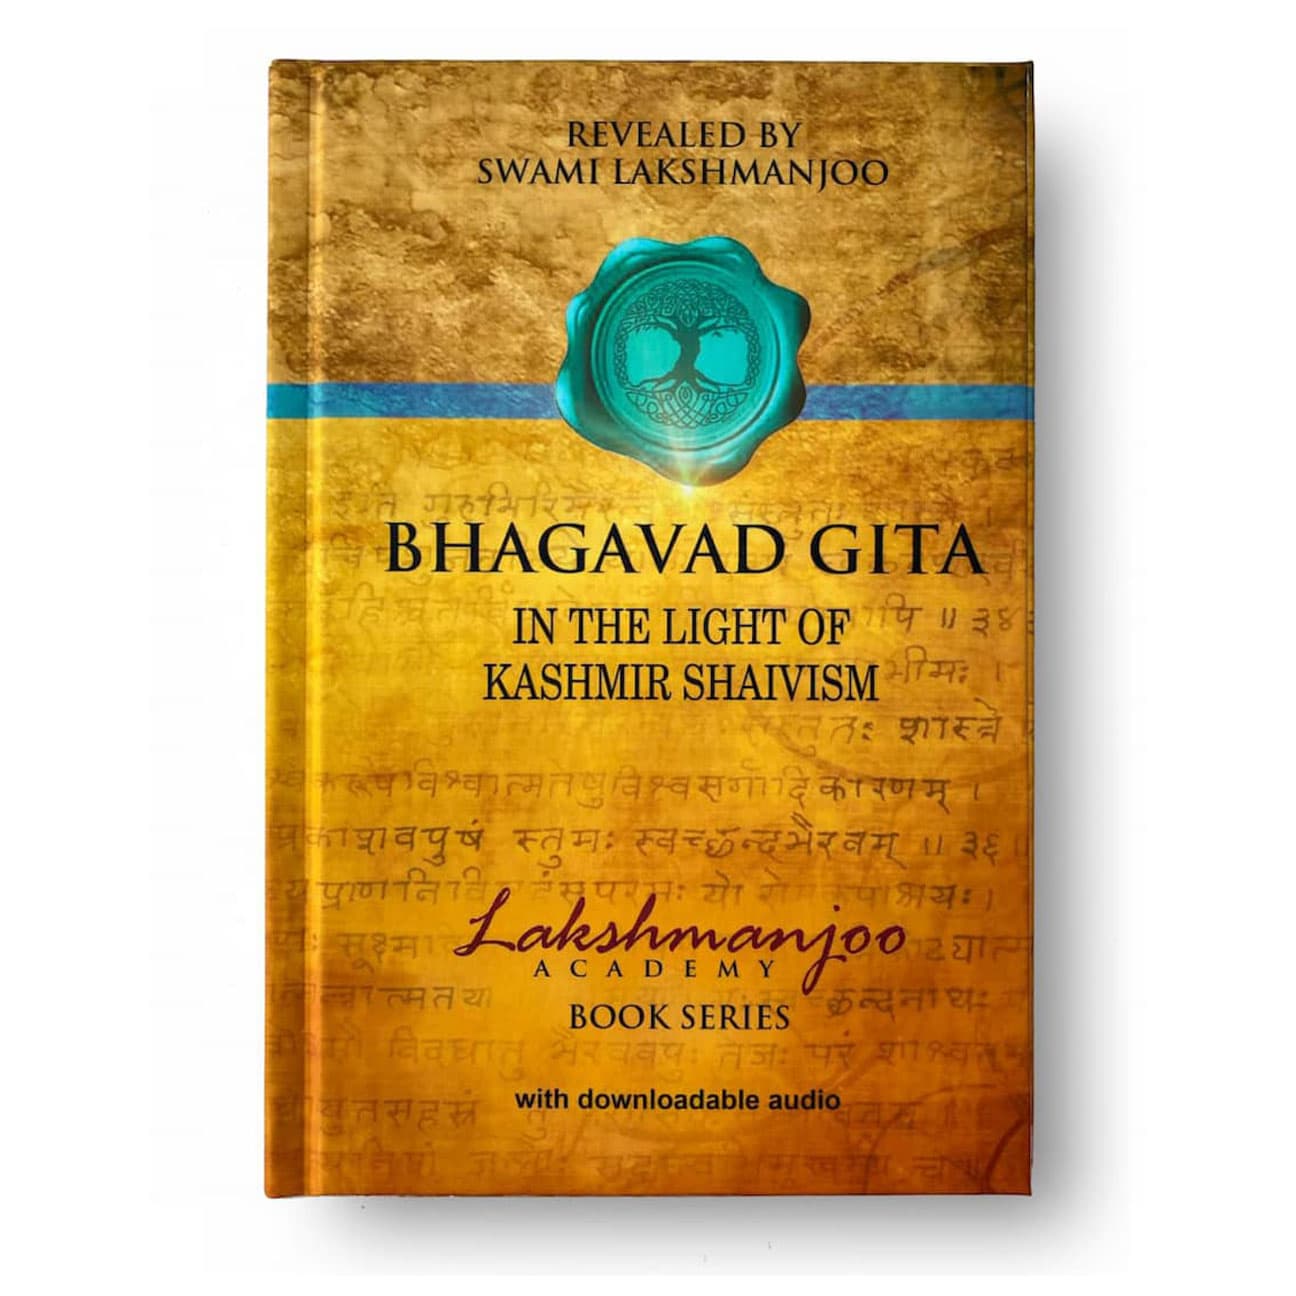 BOOK: Bhagavad Gita: In the Light of Kashmir Shaivism